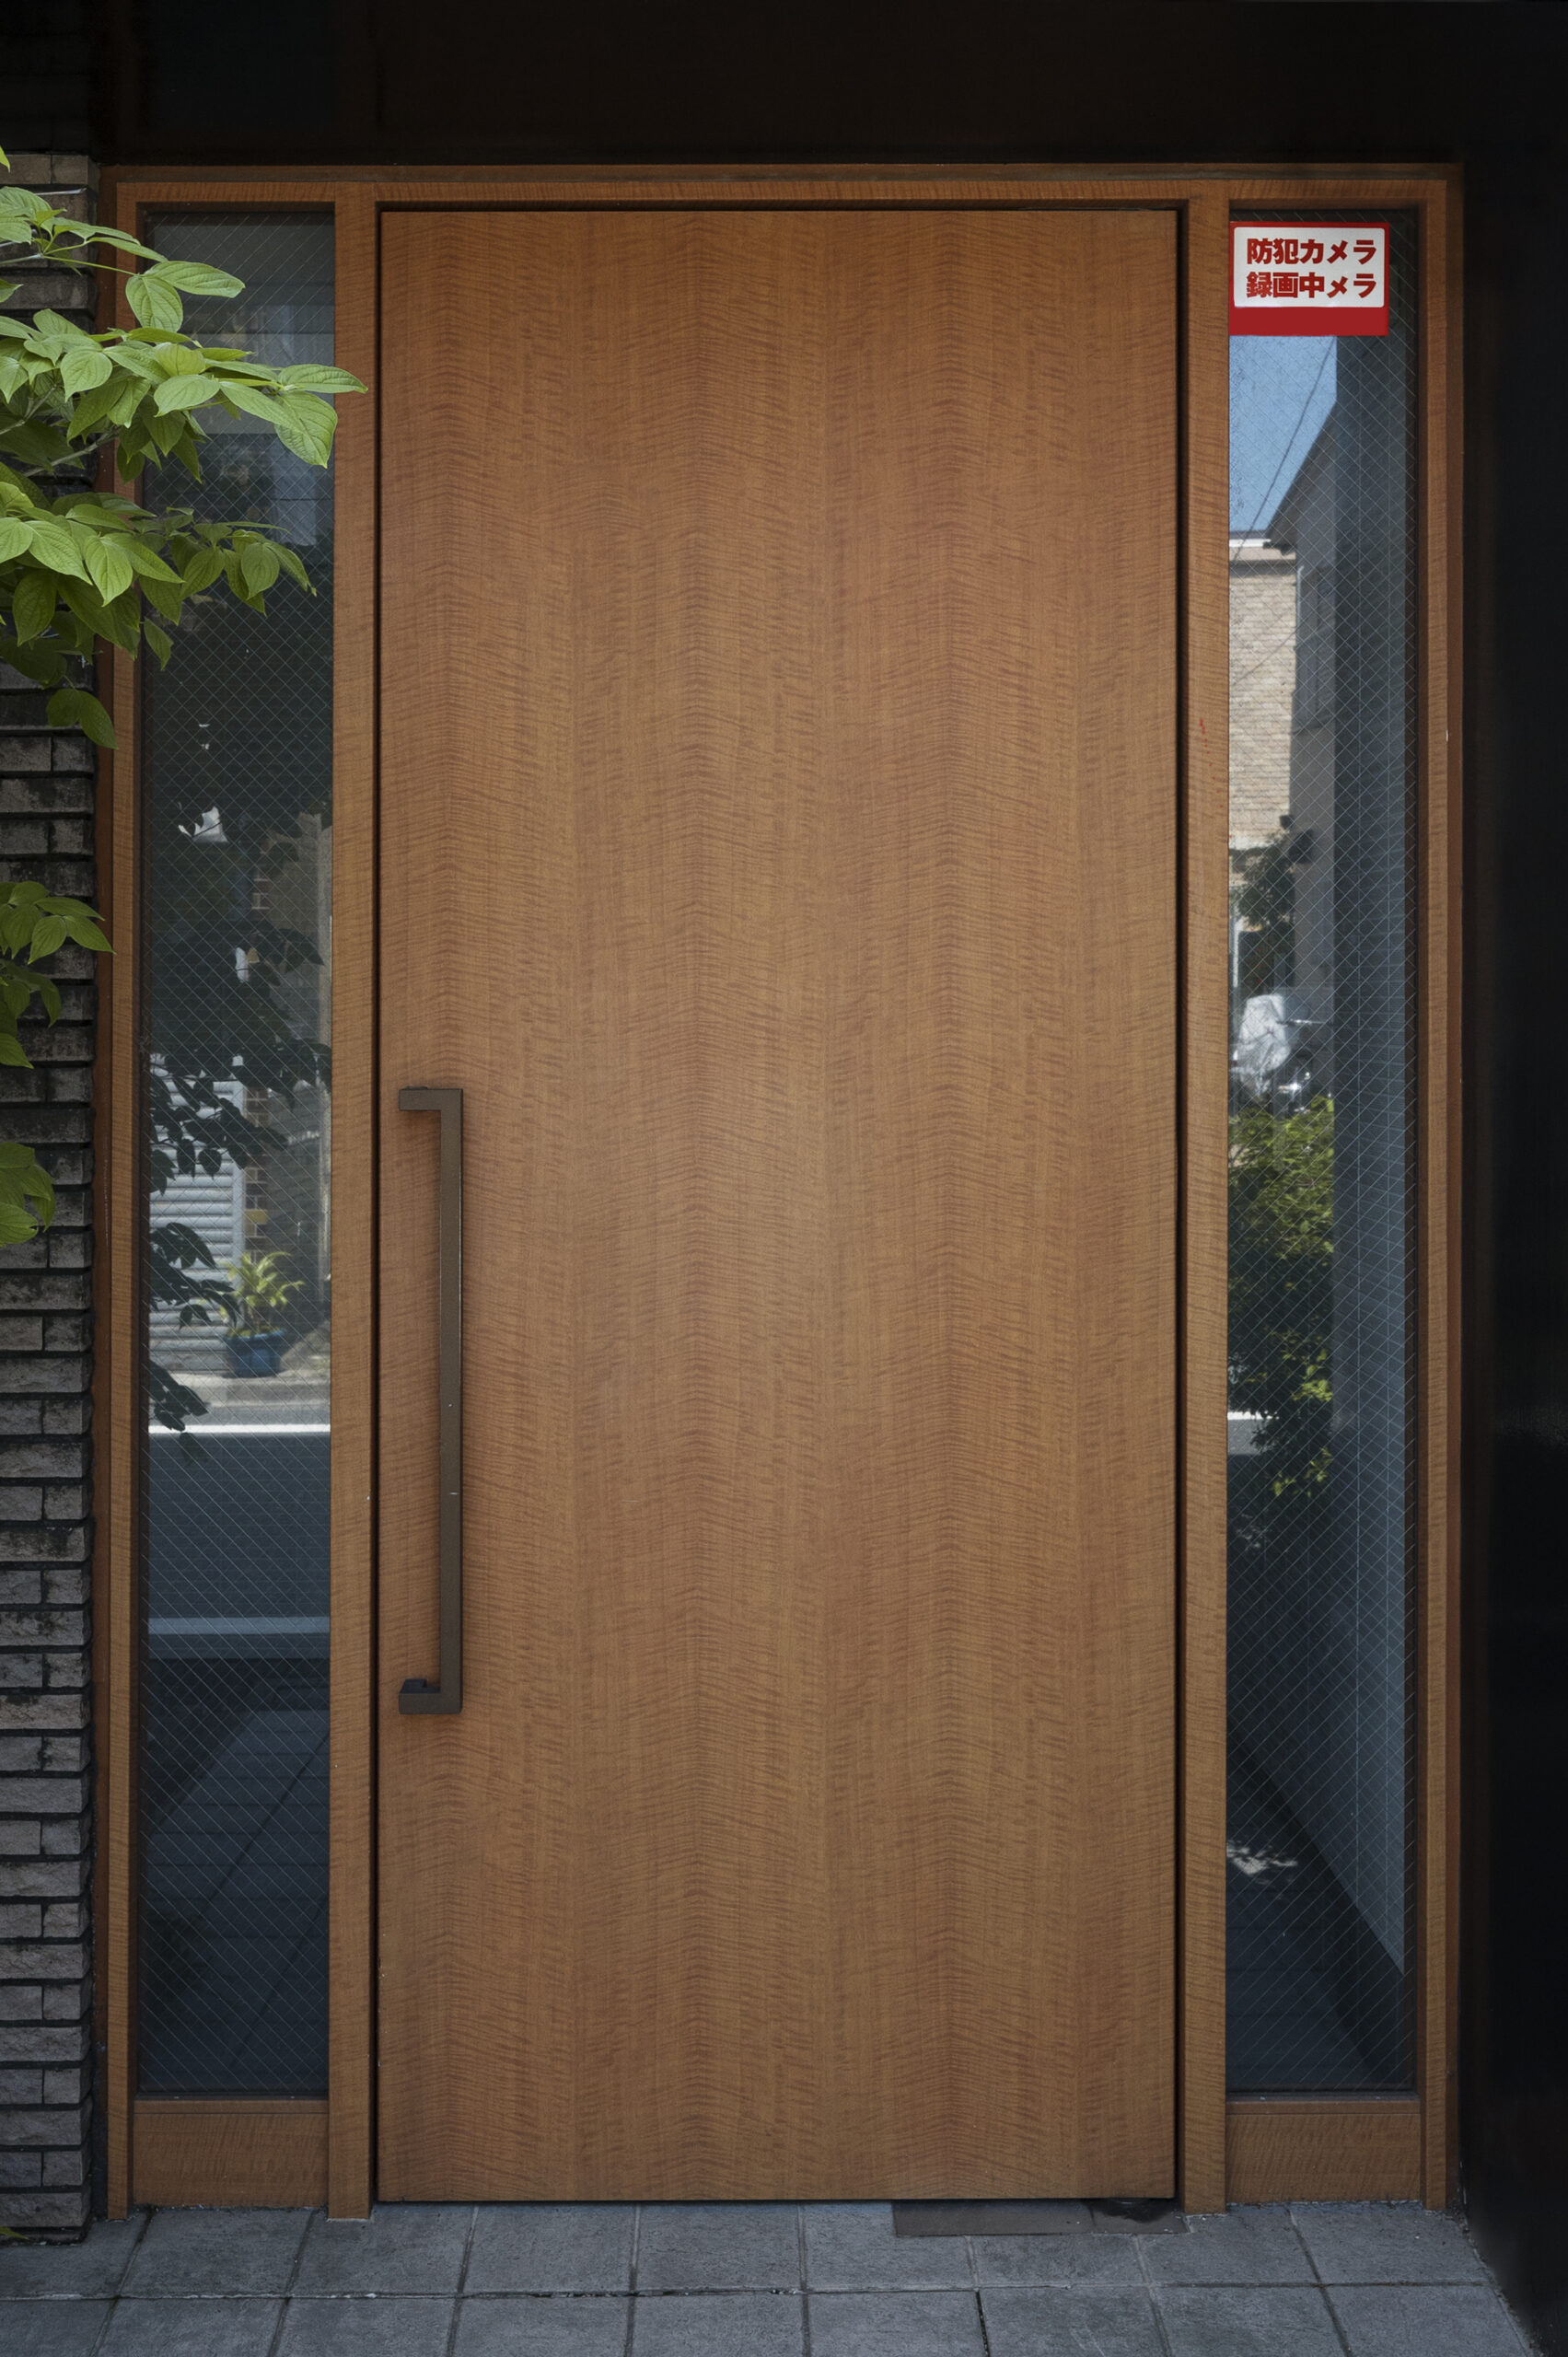 Choosing Between Flush Doors and Panel Doors: Deciding What’s Best for Your Space